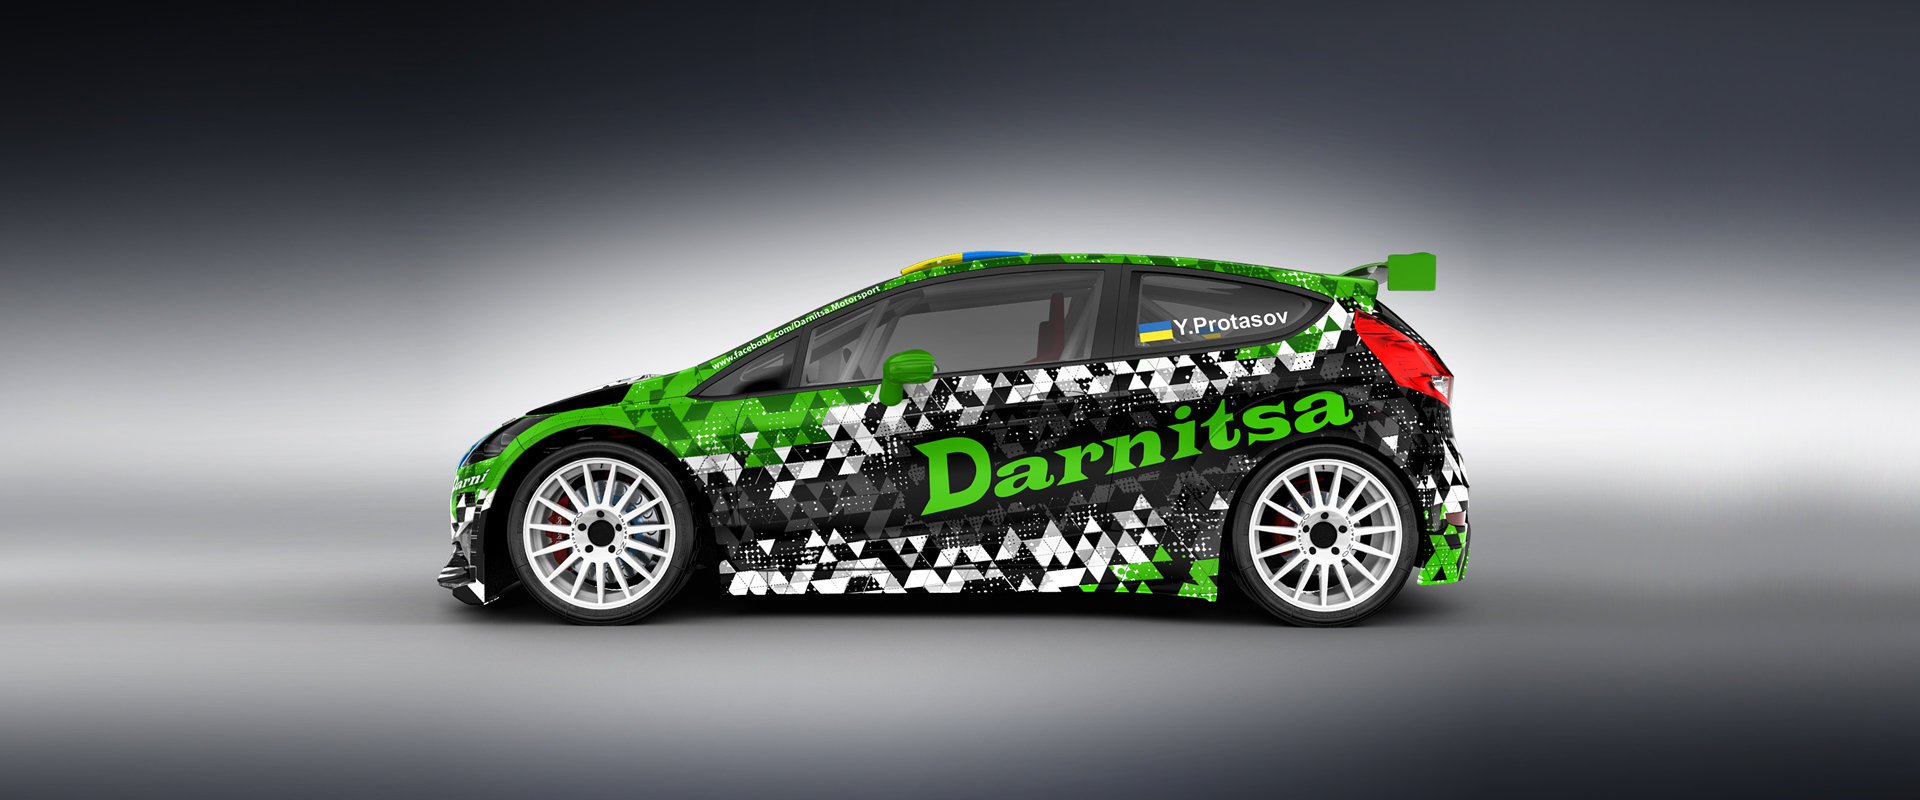 Darnitsa Motorsport #2